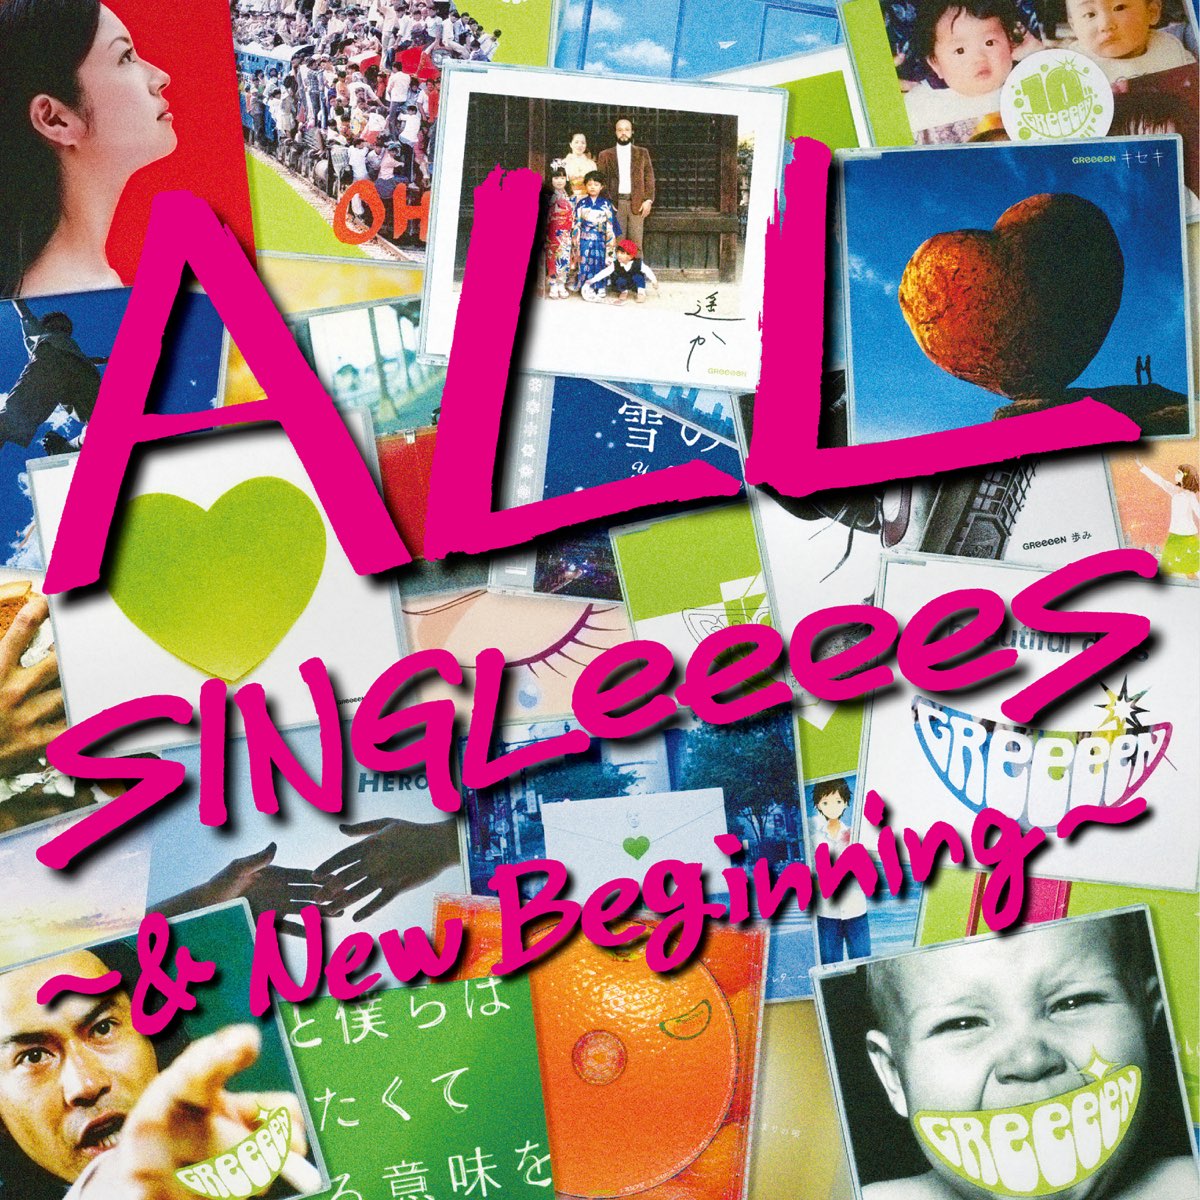 All Singleeees New Beginning By Greeeen On Apple Music